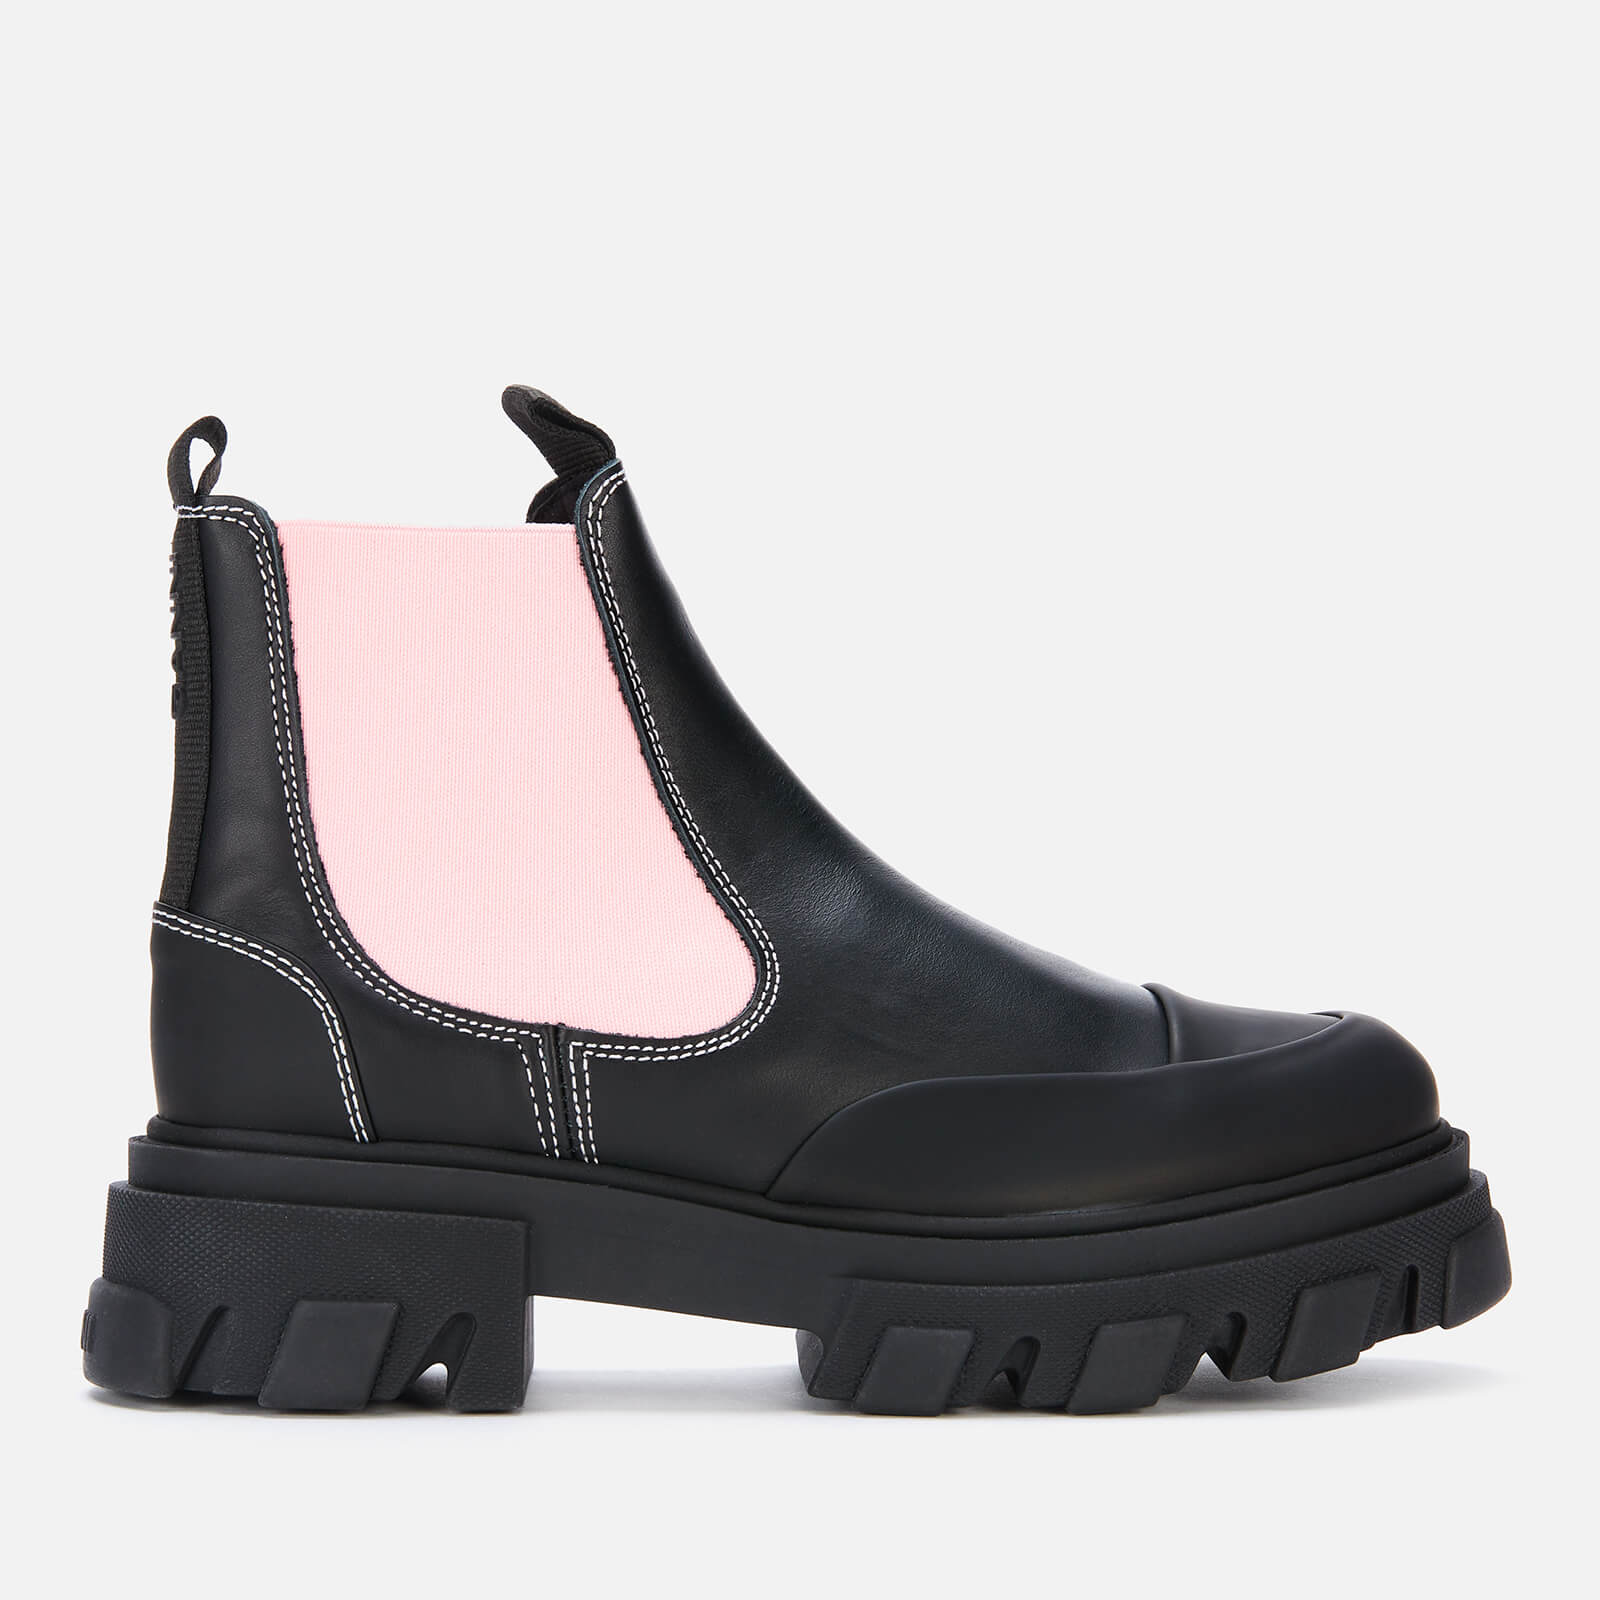 Ganni Women's Leather Chelsea Boots - Black/Pink - UK 7